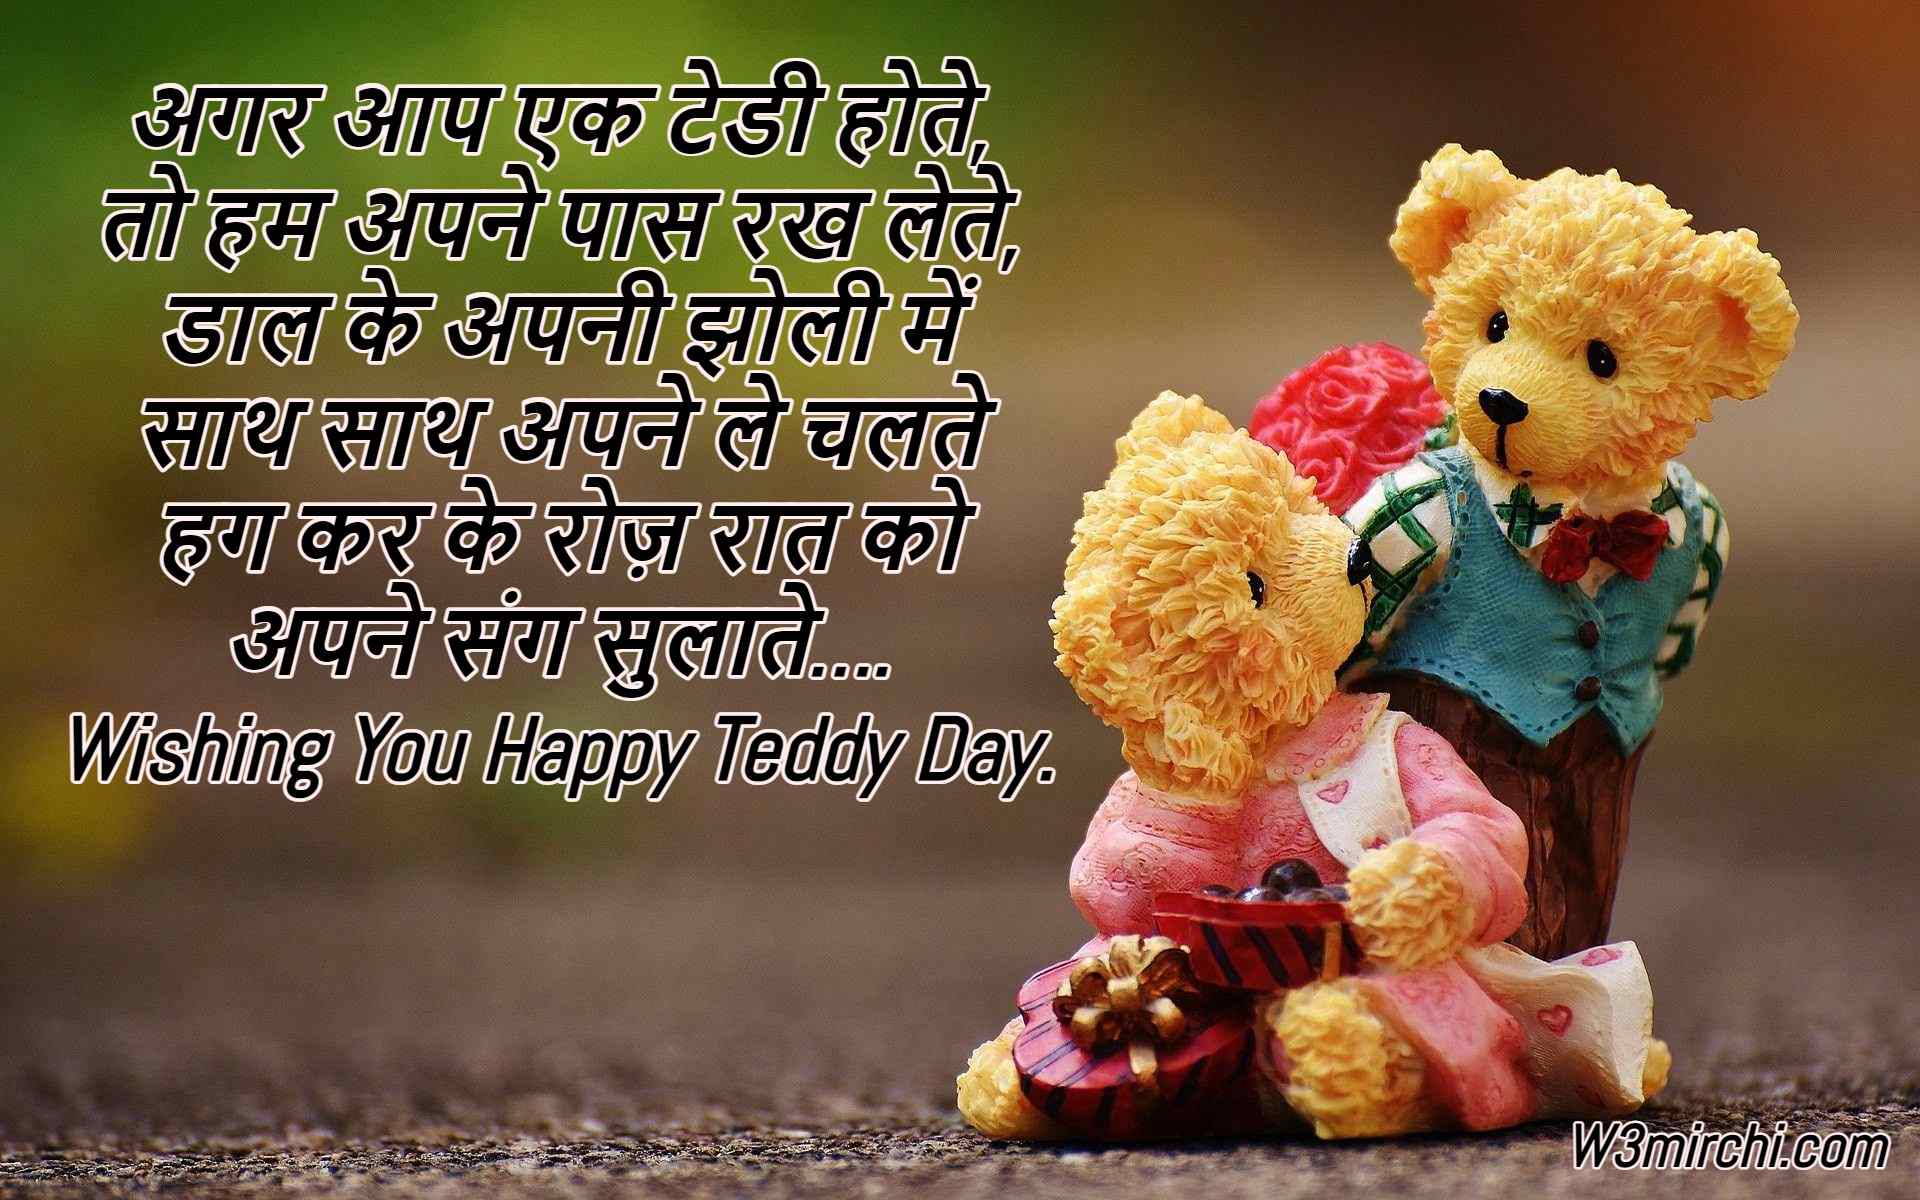 Wishing You Happy Teddy Day.